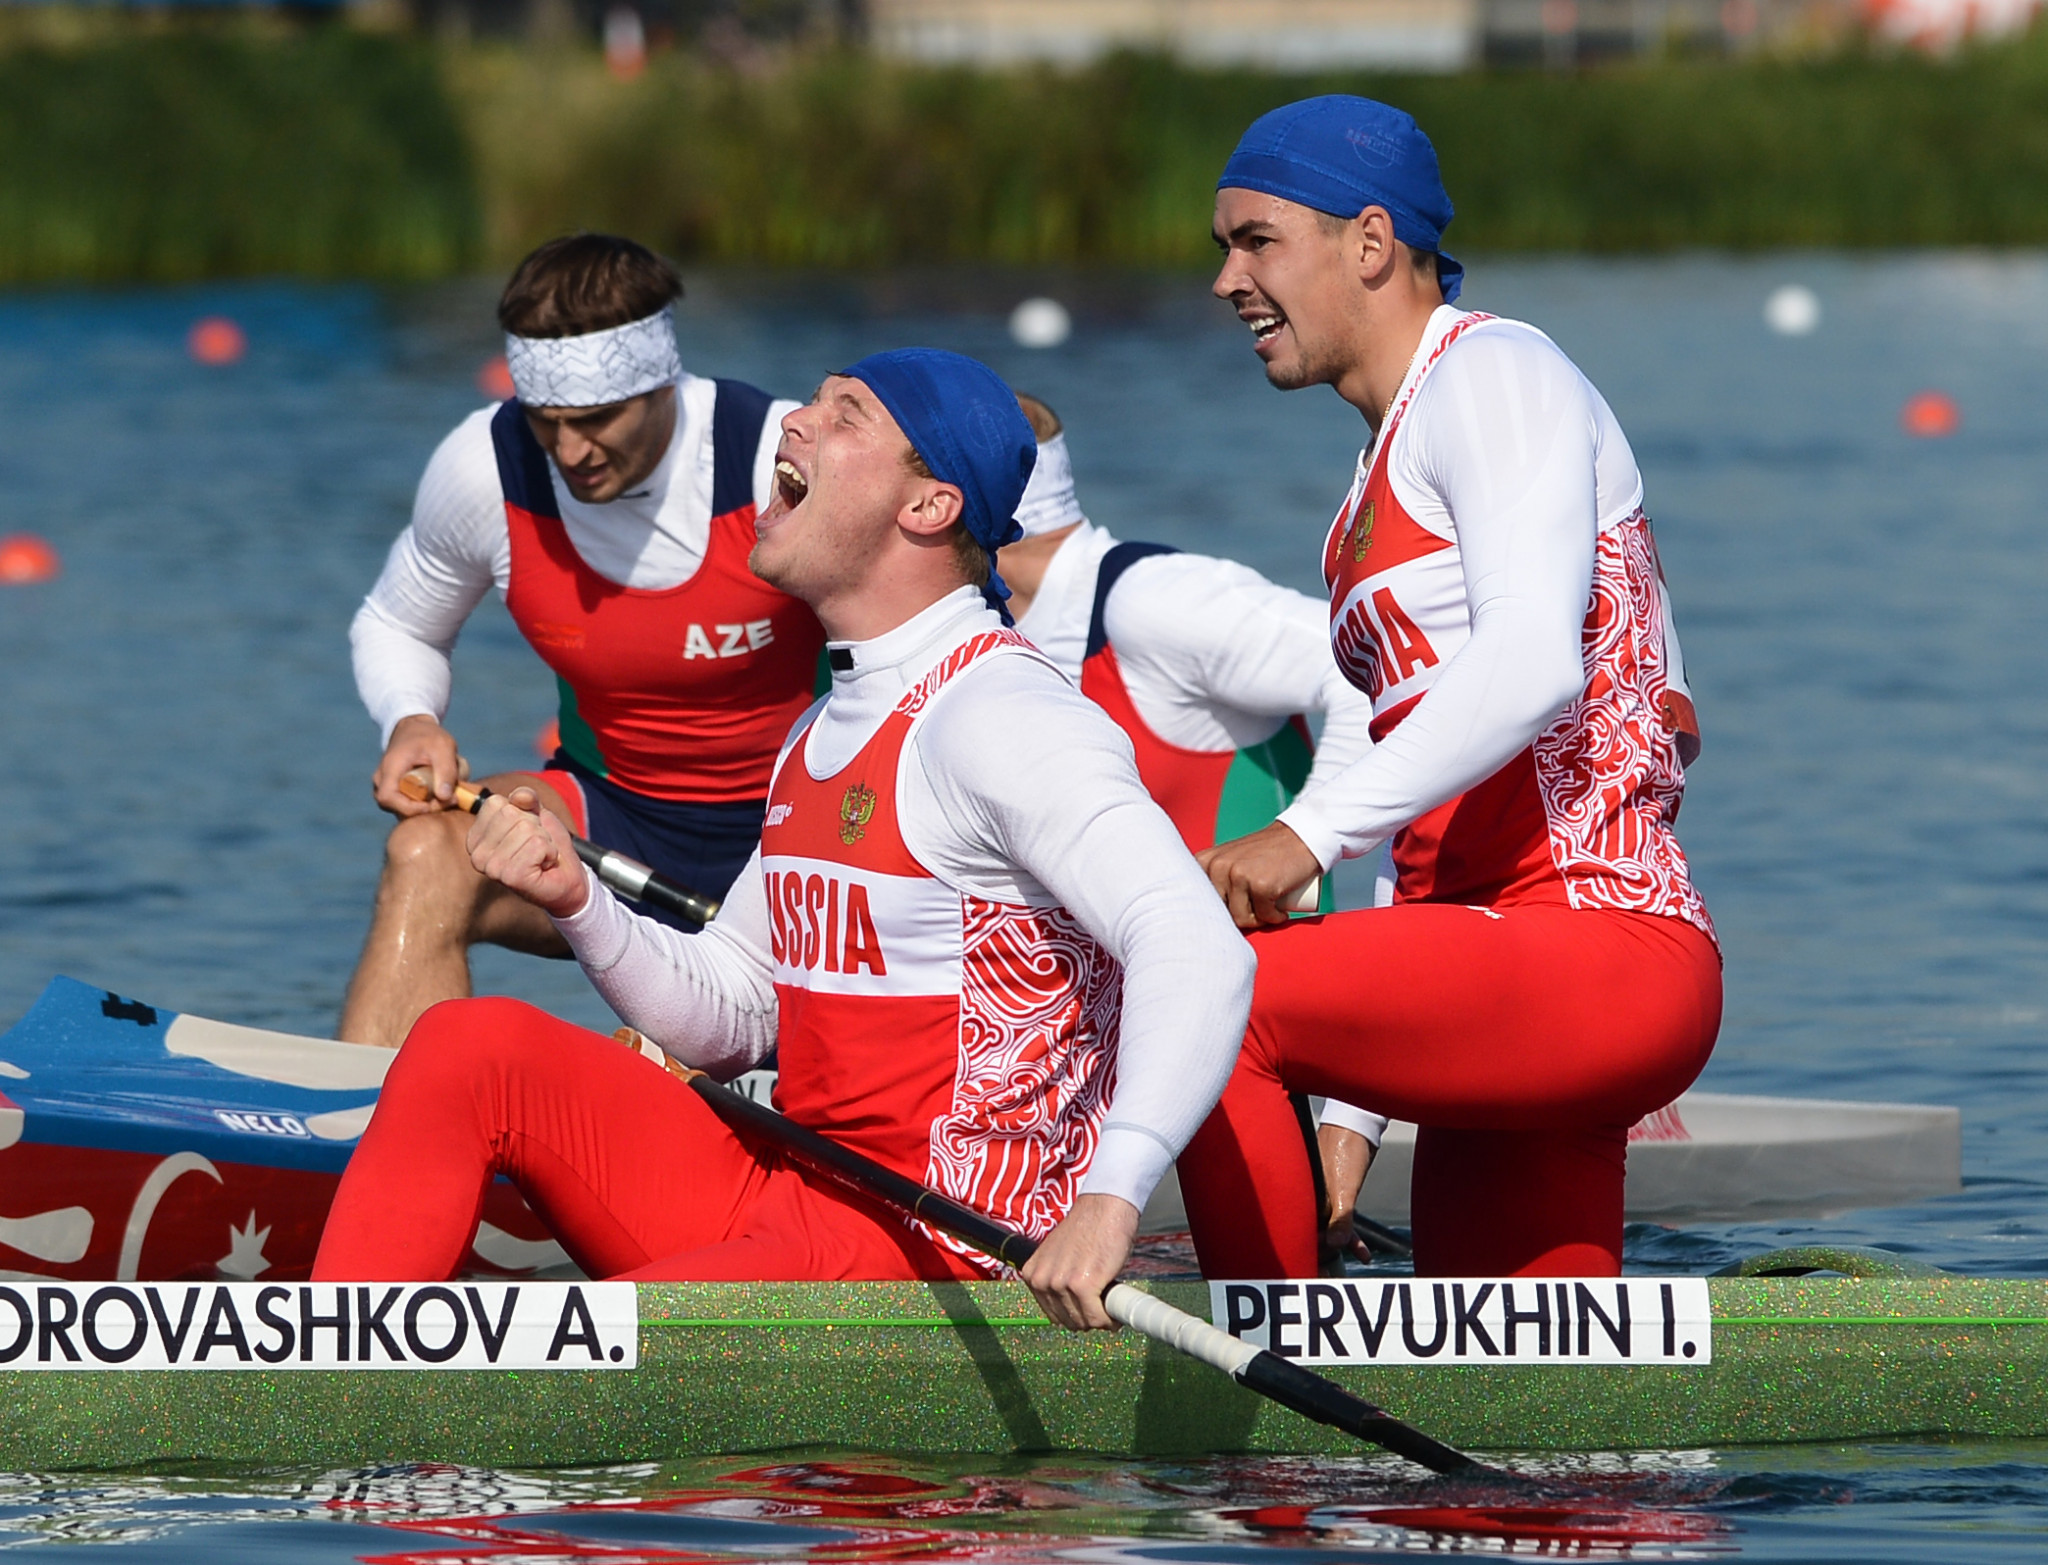 Alexei Korovashkov, left, won Olympic bronze in 2012 alongside his partner Ilya Pervukhin ©Getty Images